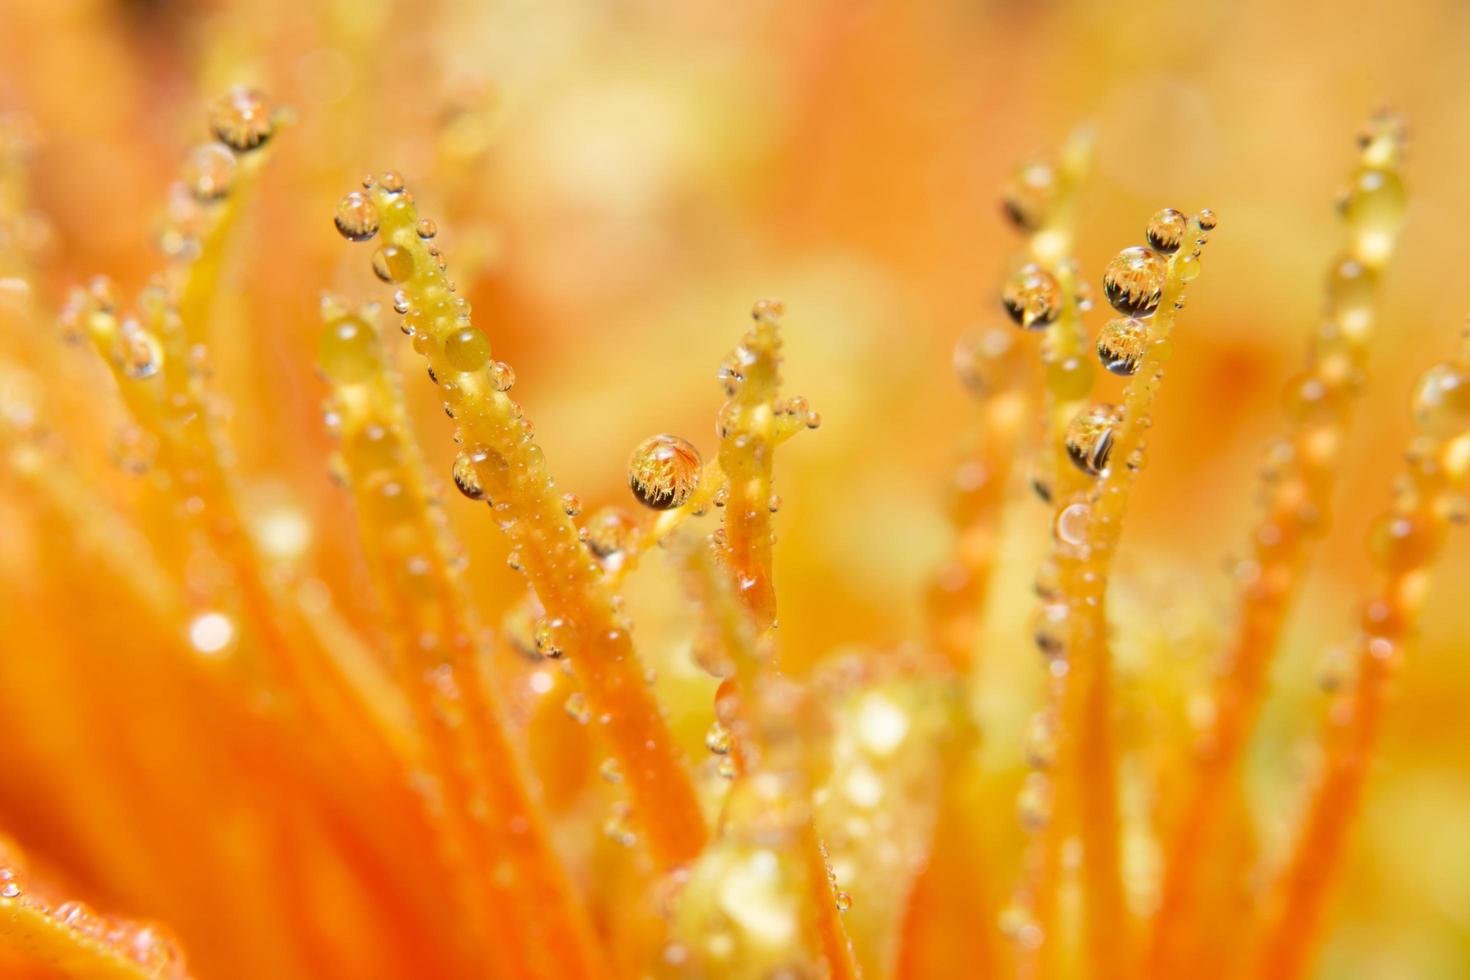 Water drops on orange flower petals, close-up photo